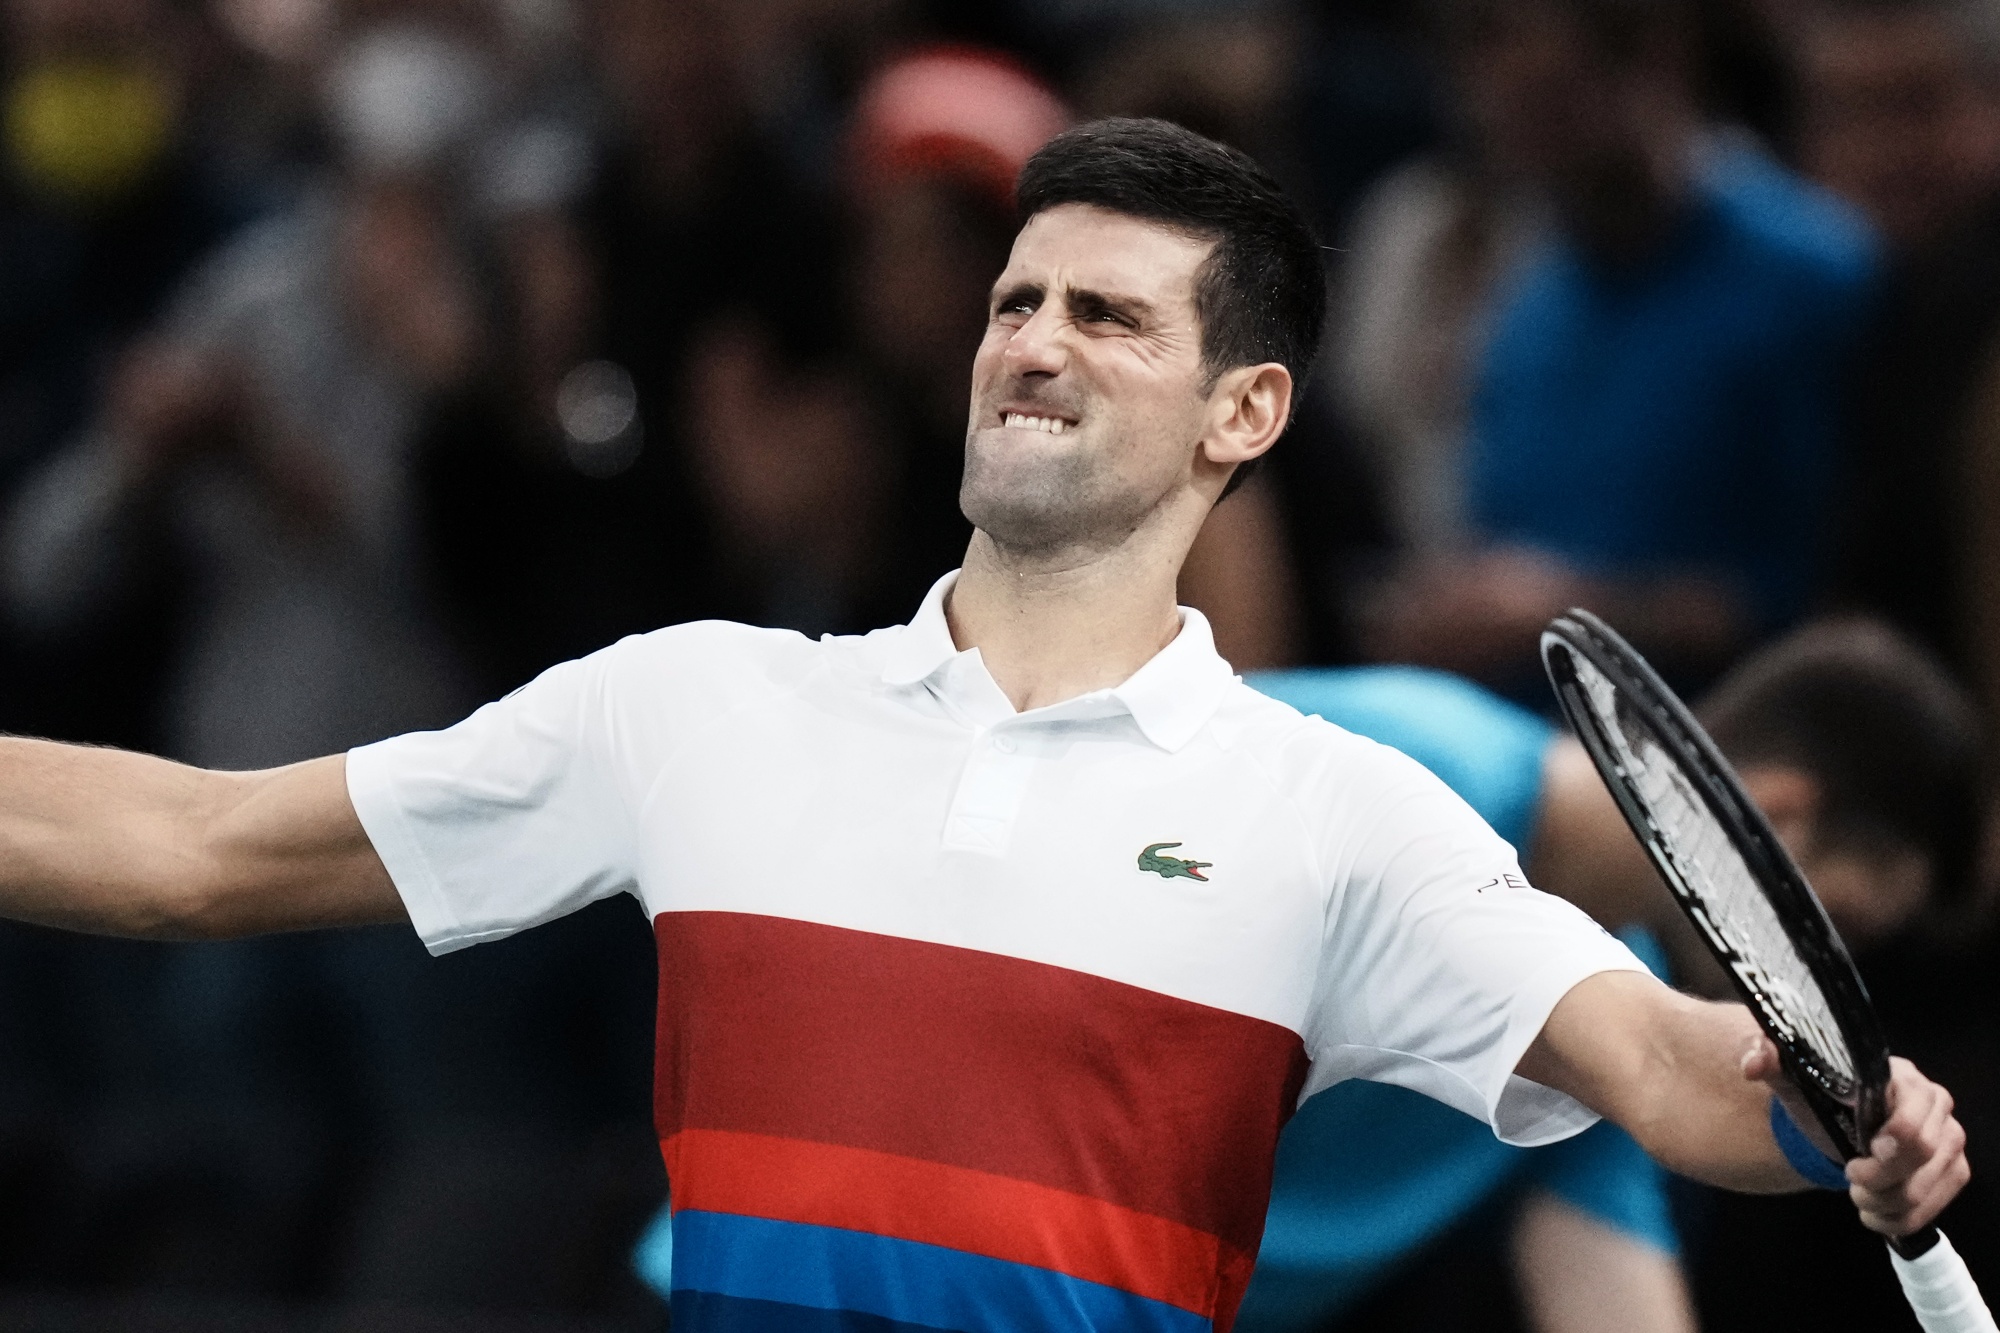 Djokovic Reaches Paris Final to End Record 7th Year as No